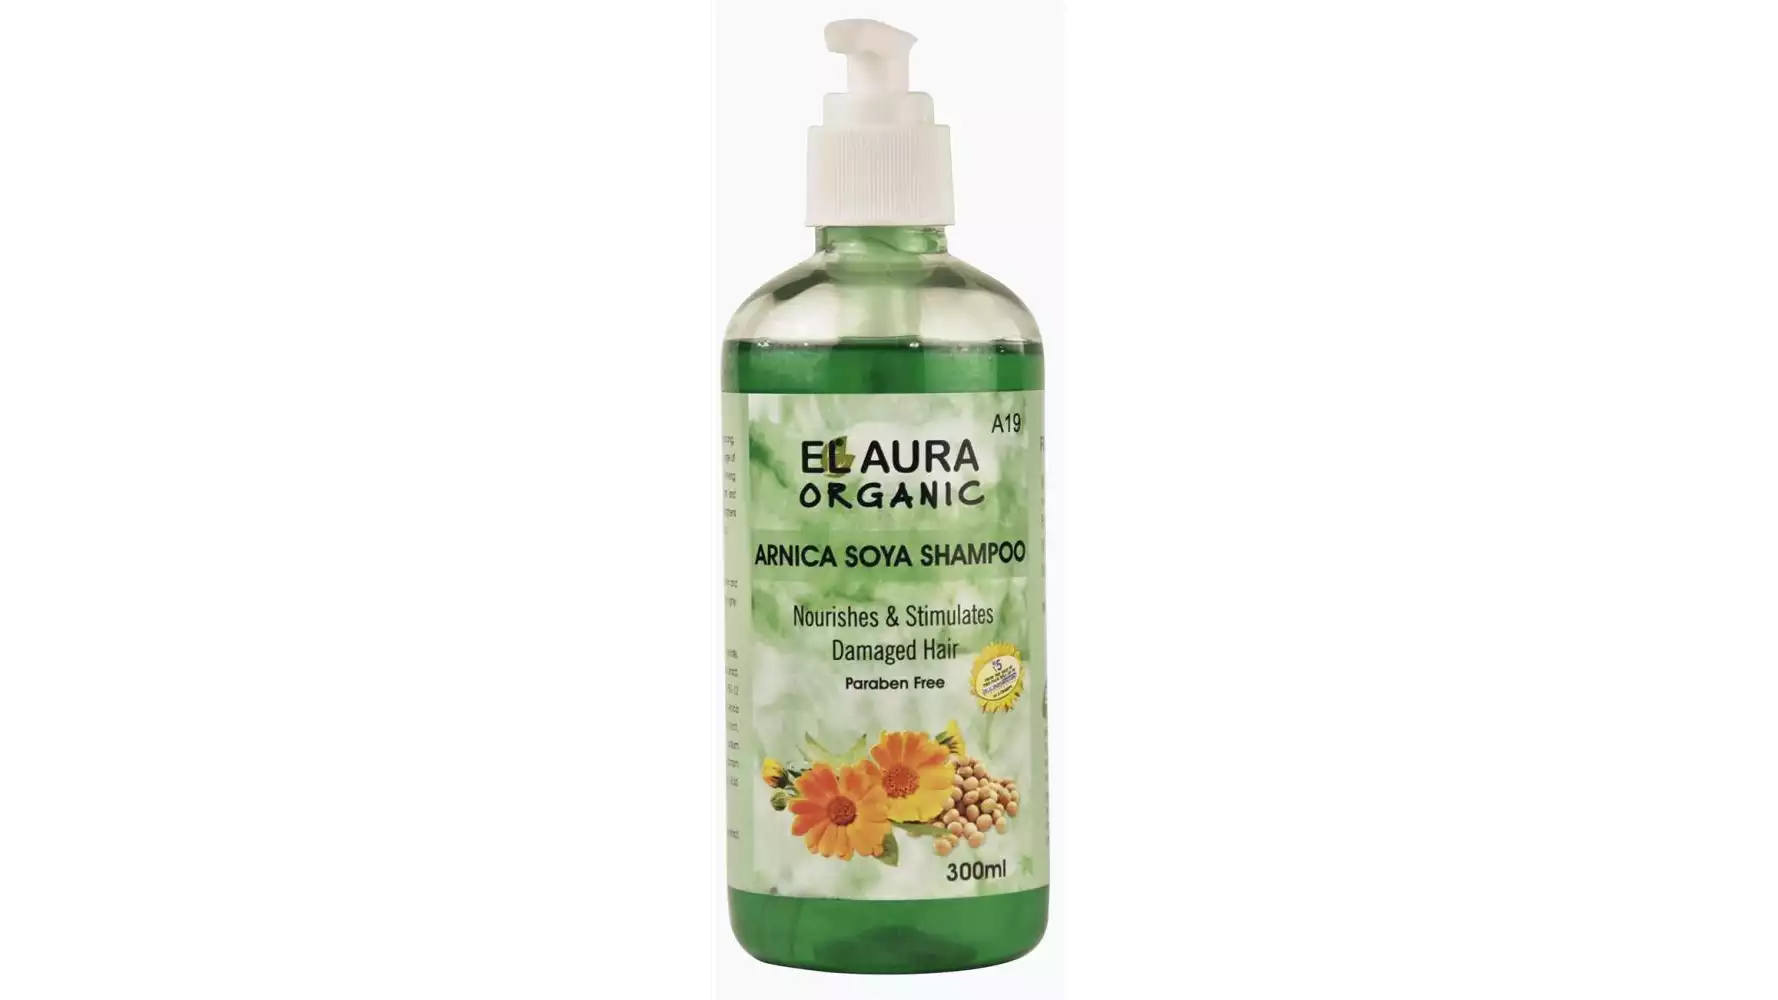 Dr. Lal Elaura Organic Arnica Soya Shampoo Paraben Free (300ml)